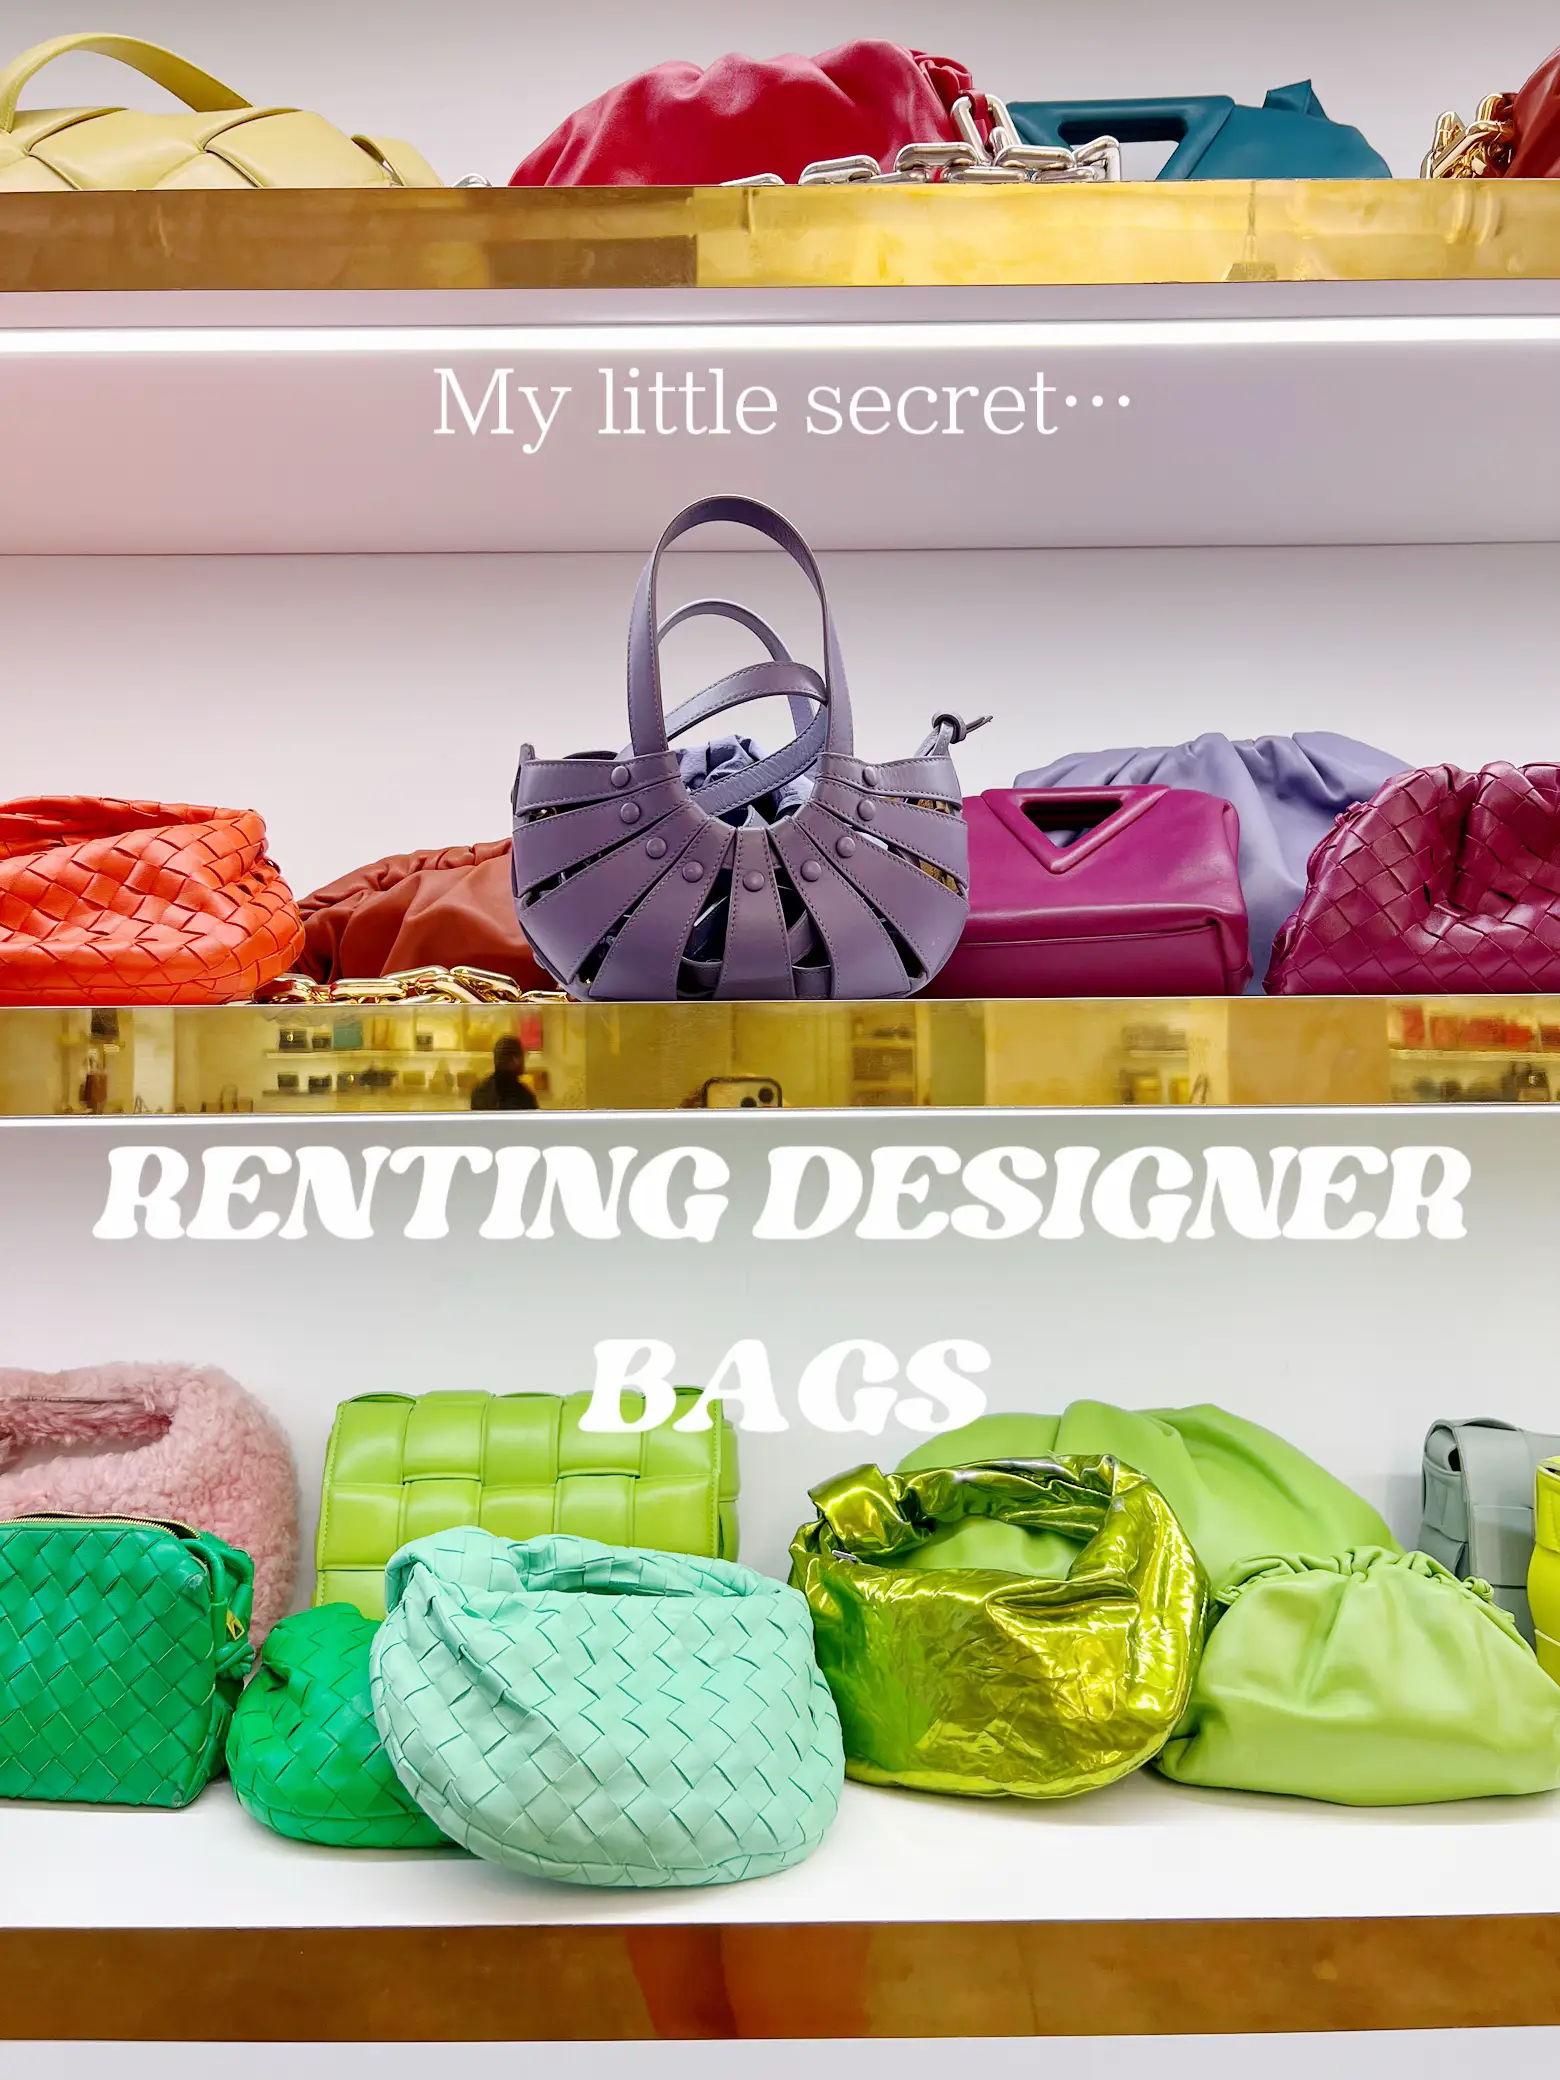 Vivrelle review  Rent designer handbags! 